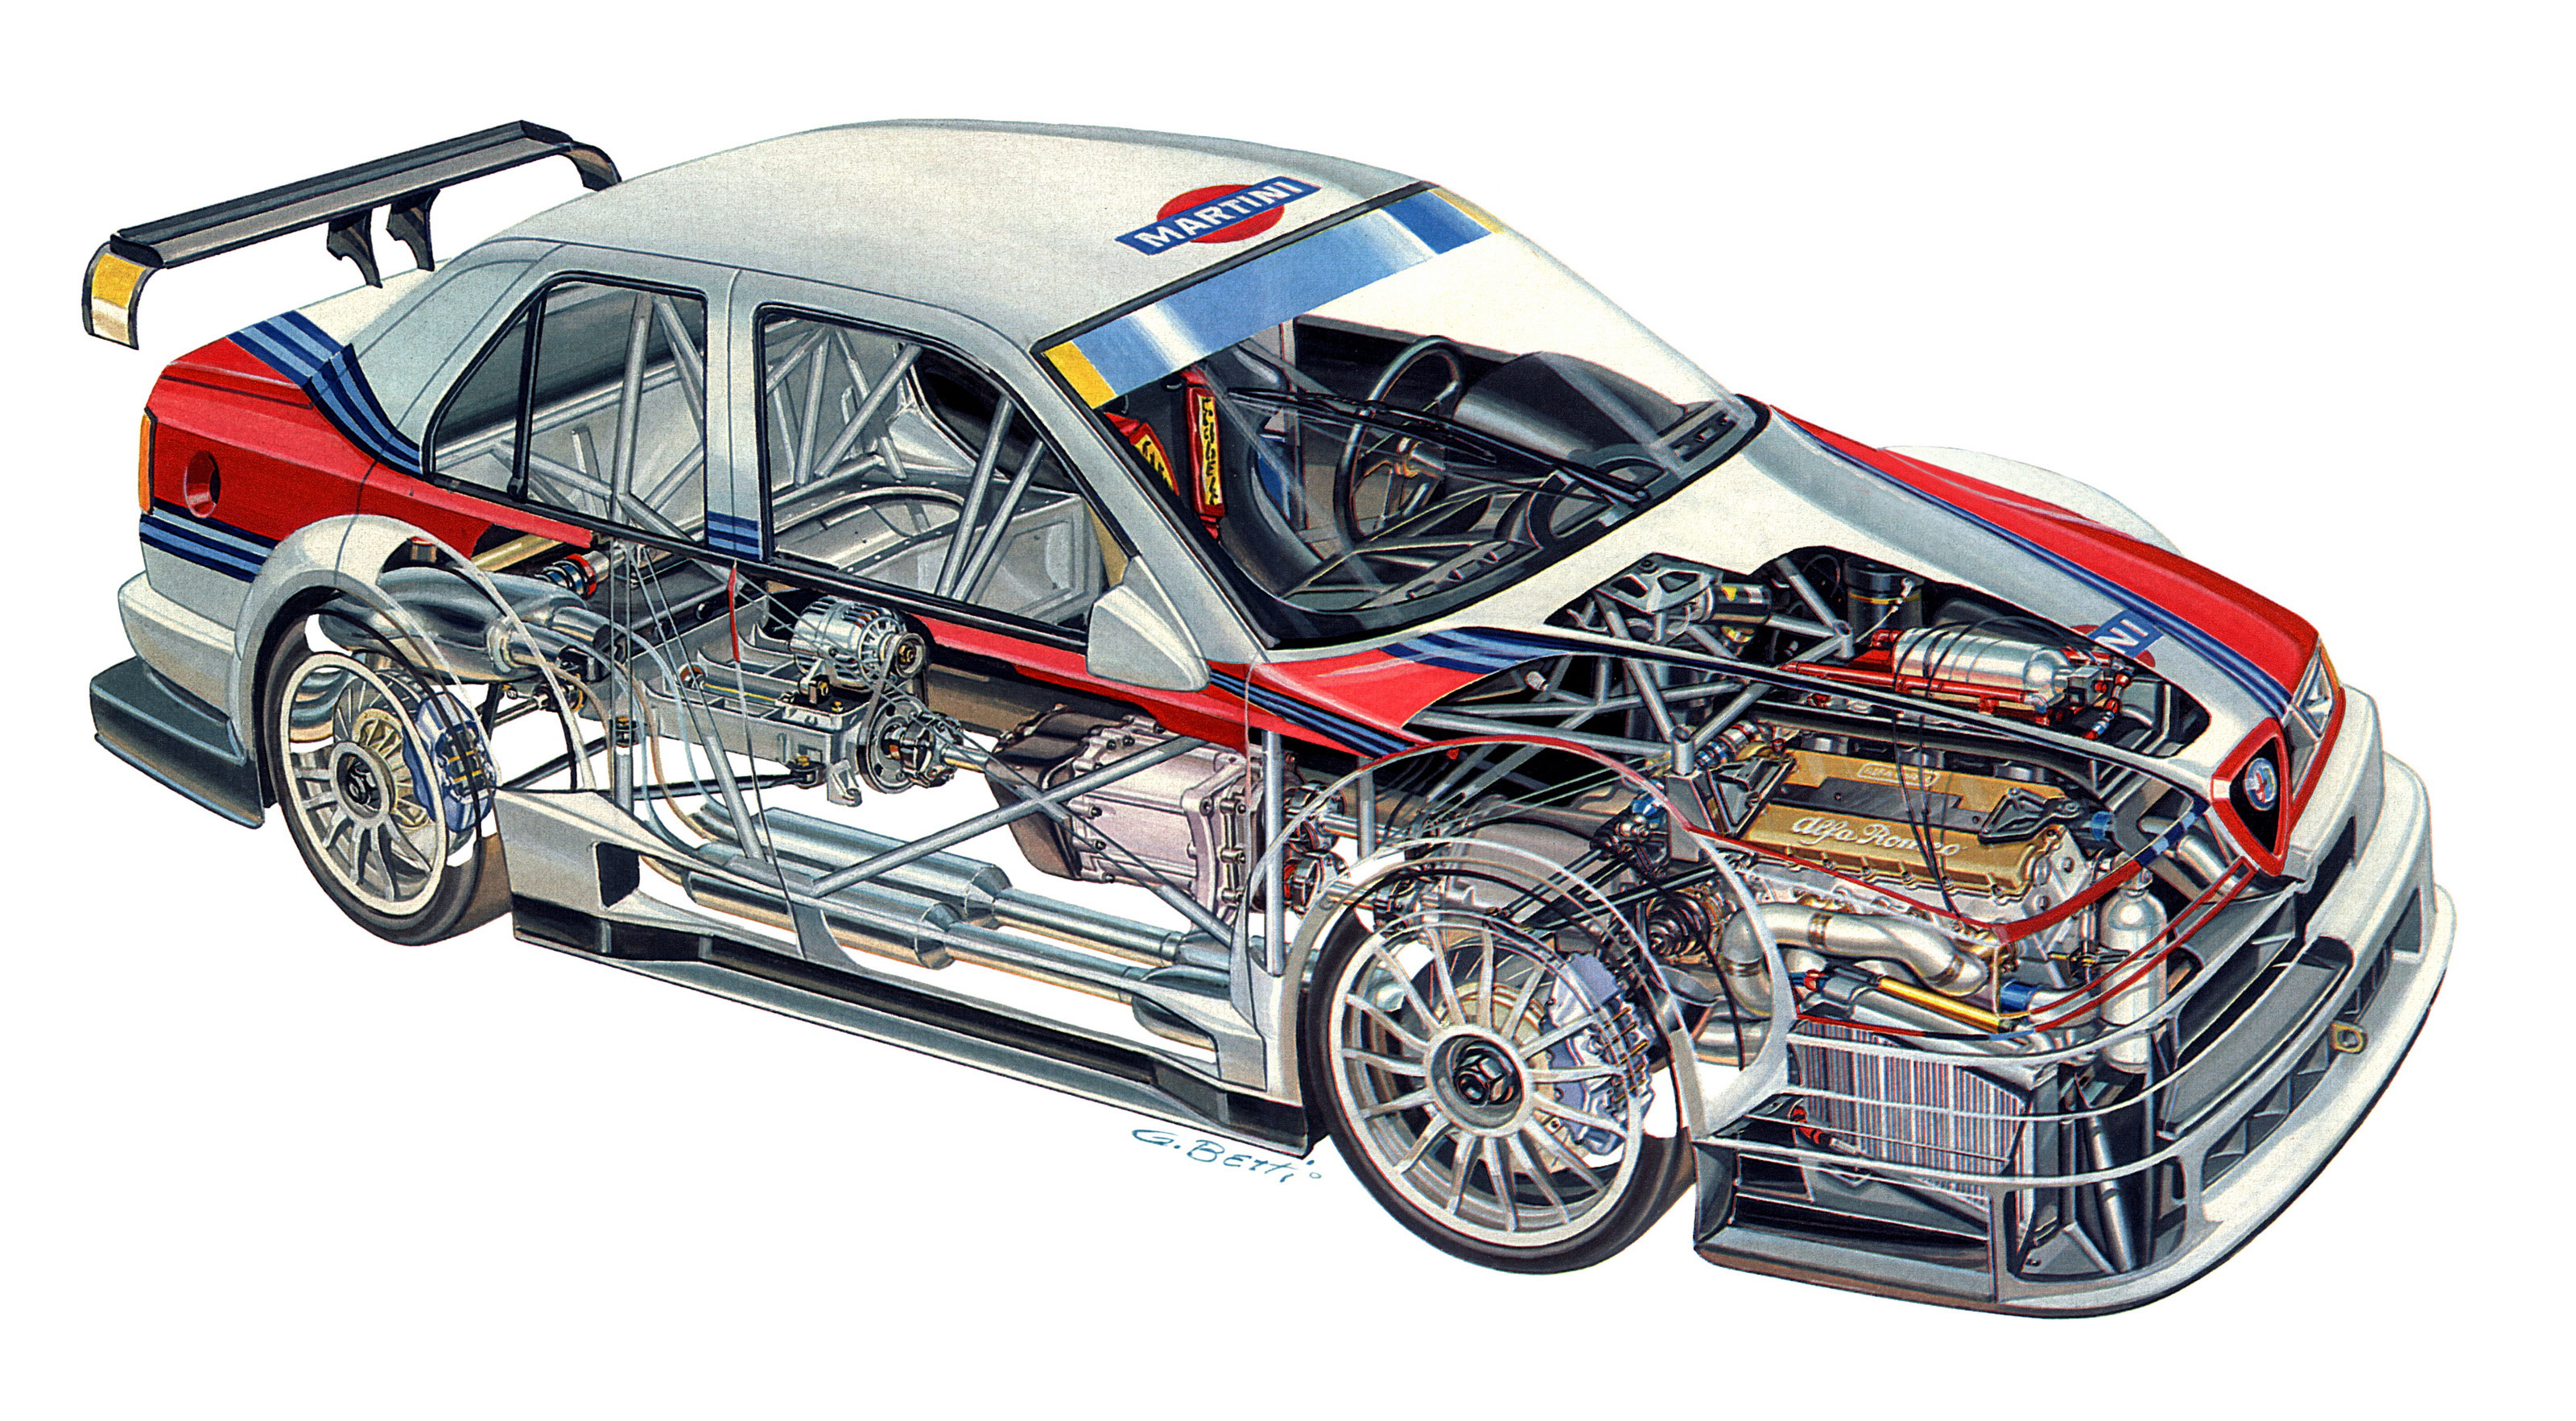 Alfa Romeo 155 V6 cutaway